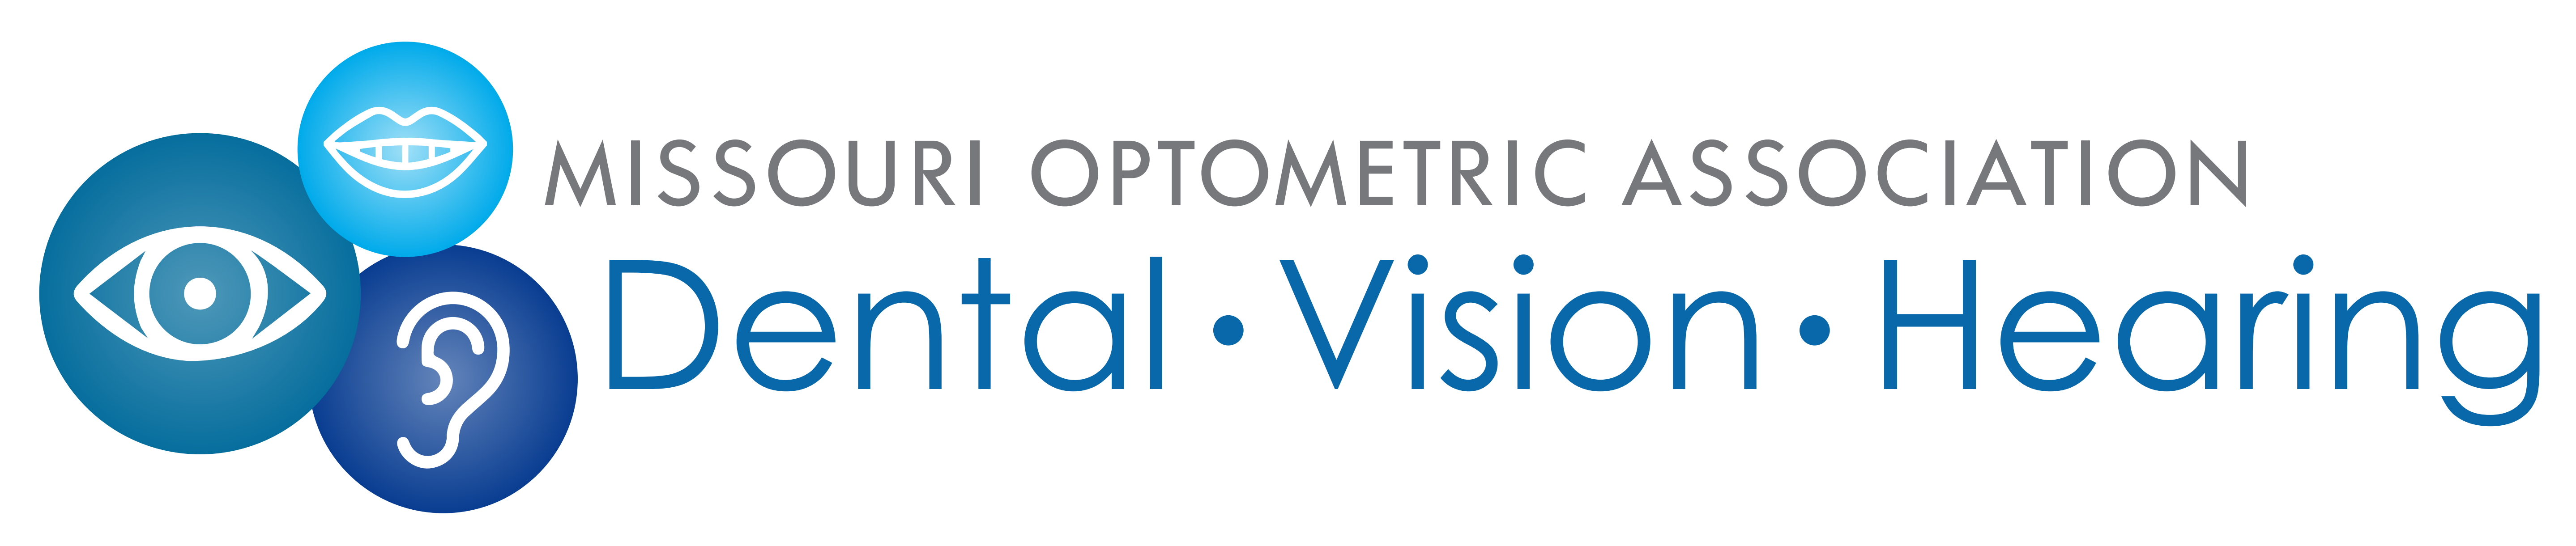 Missouri Optometric Association DVH